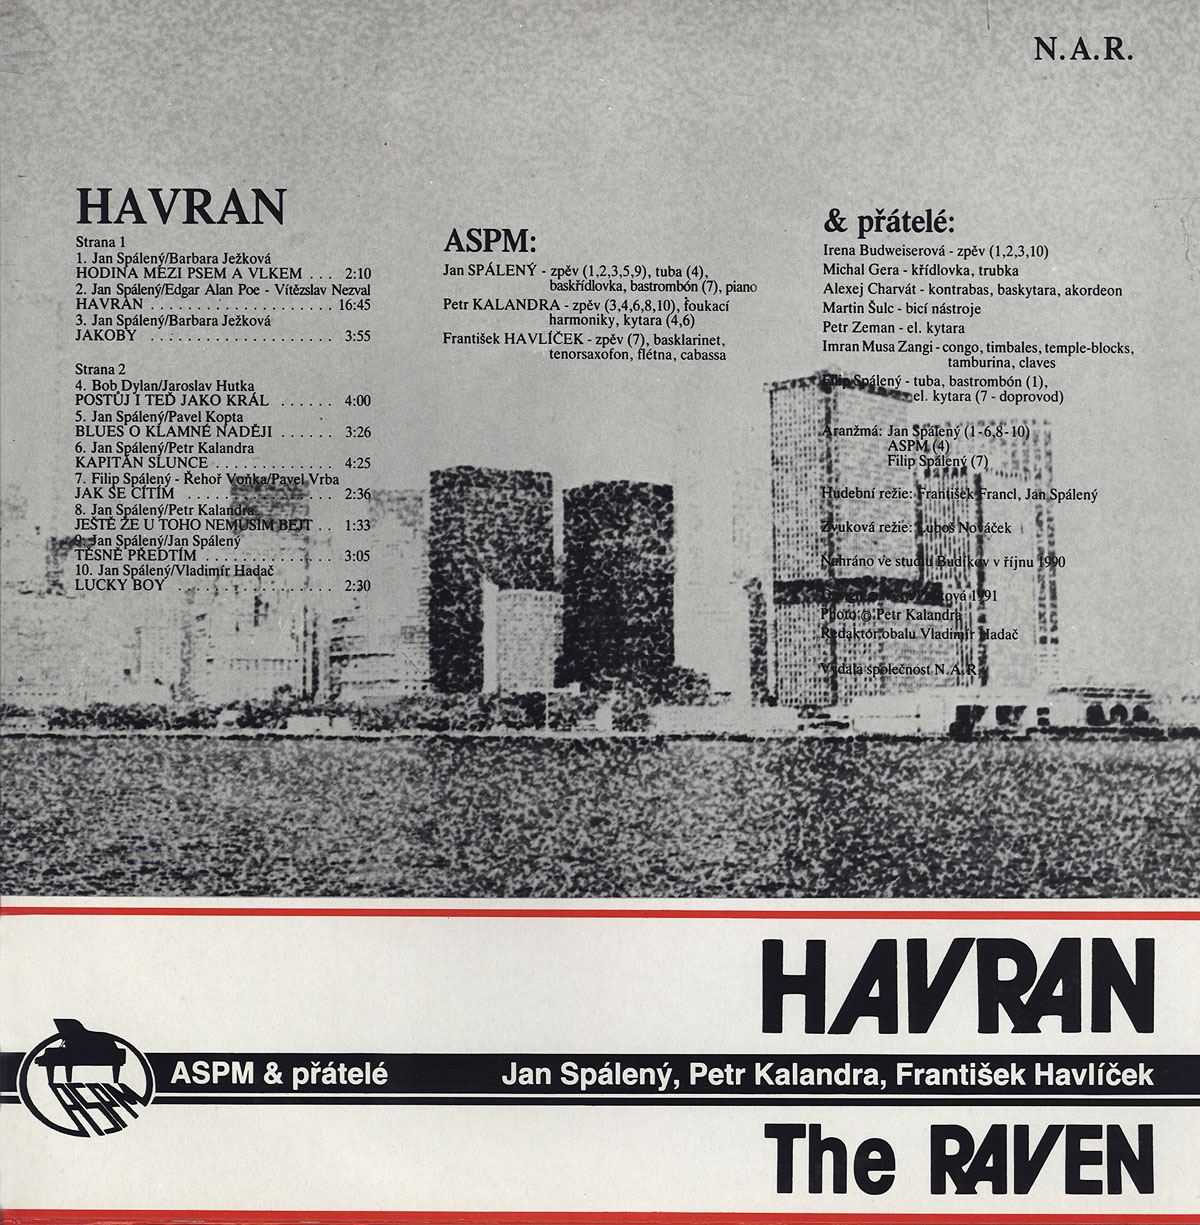 ASPM - HAVRAN